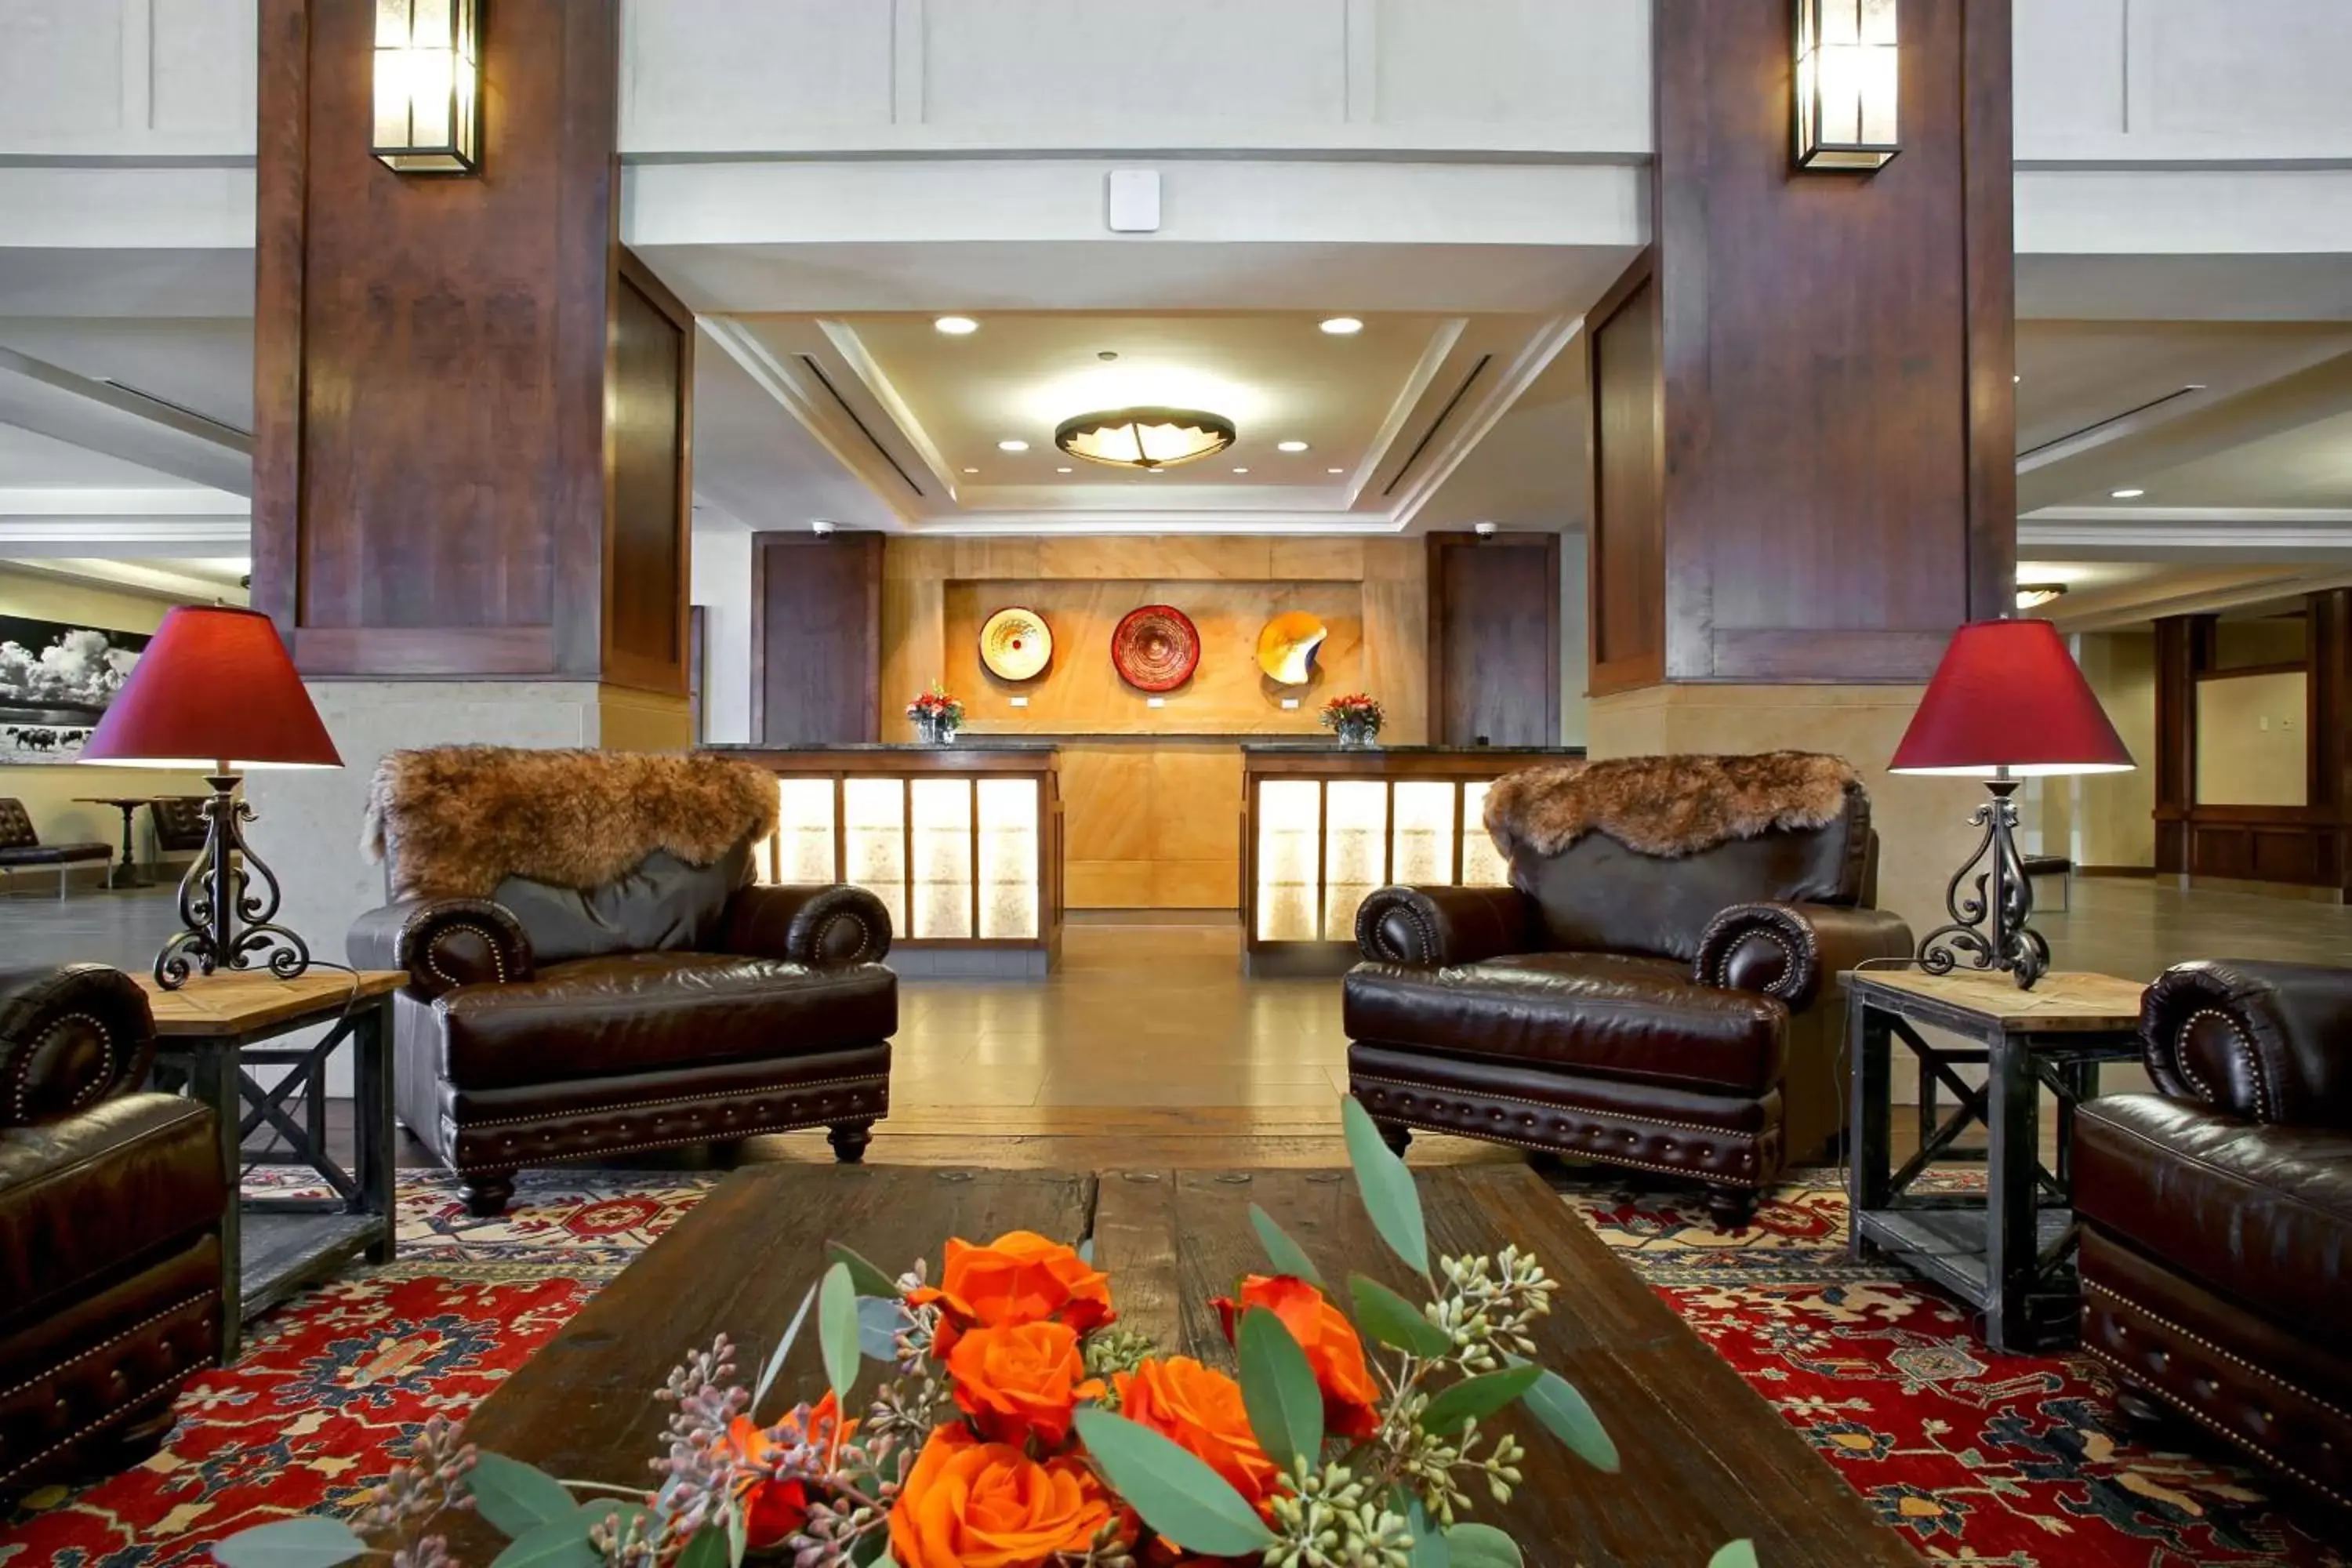 Lobby or reception in Drury Plaza Hotel in Santa Fe